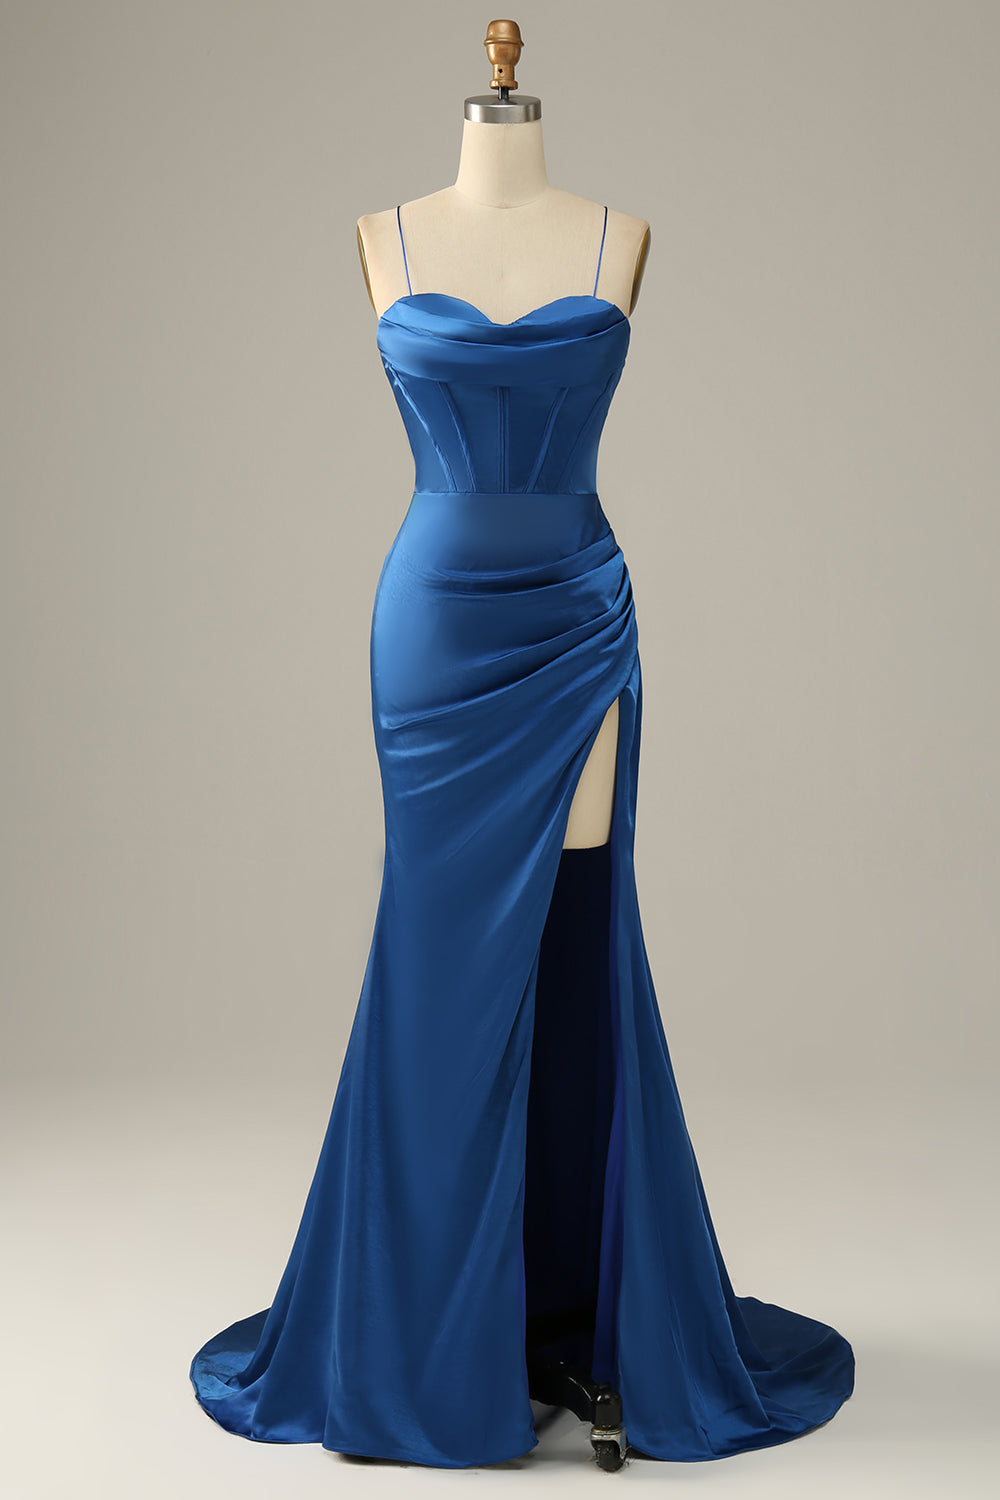 Royal Blue Spaghetti Straps Mermaid Corset Prom Dress outfits, Bridesmaid Dresses Black